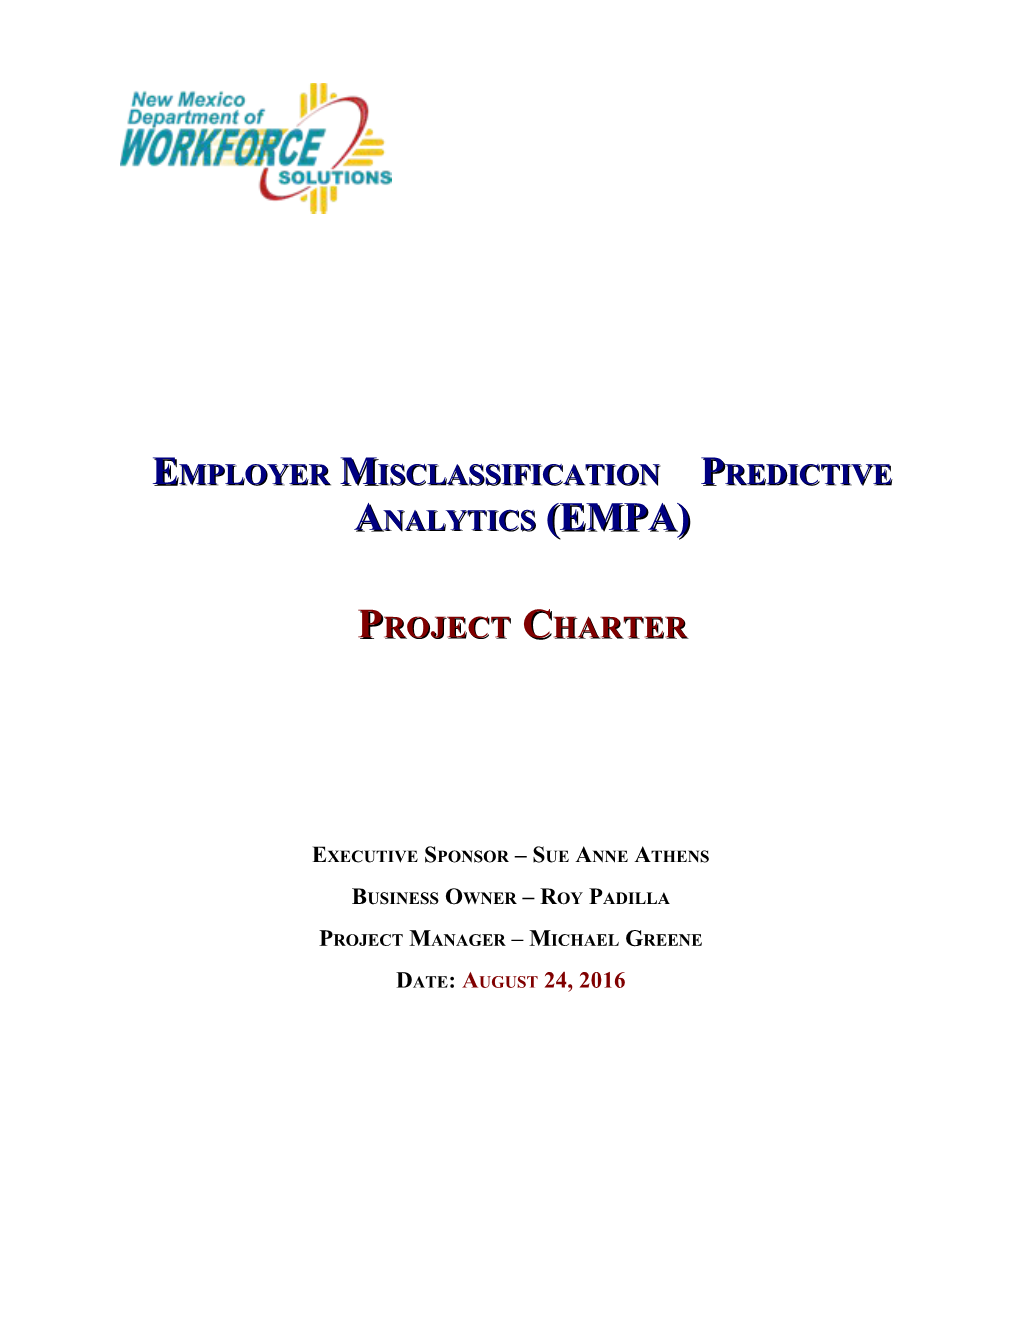 Employer Misclassification Predictive Analytics (EMPA)